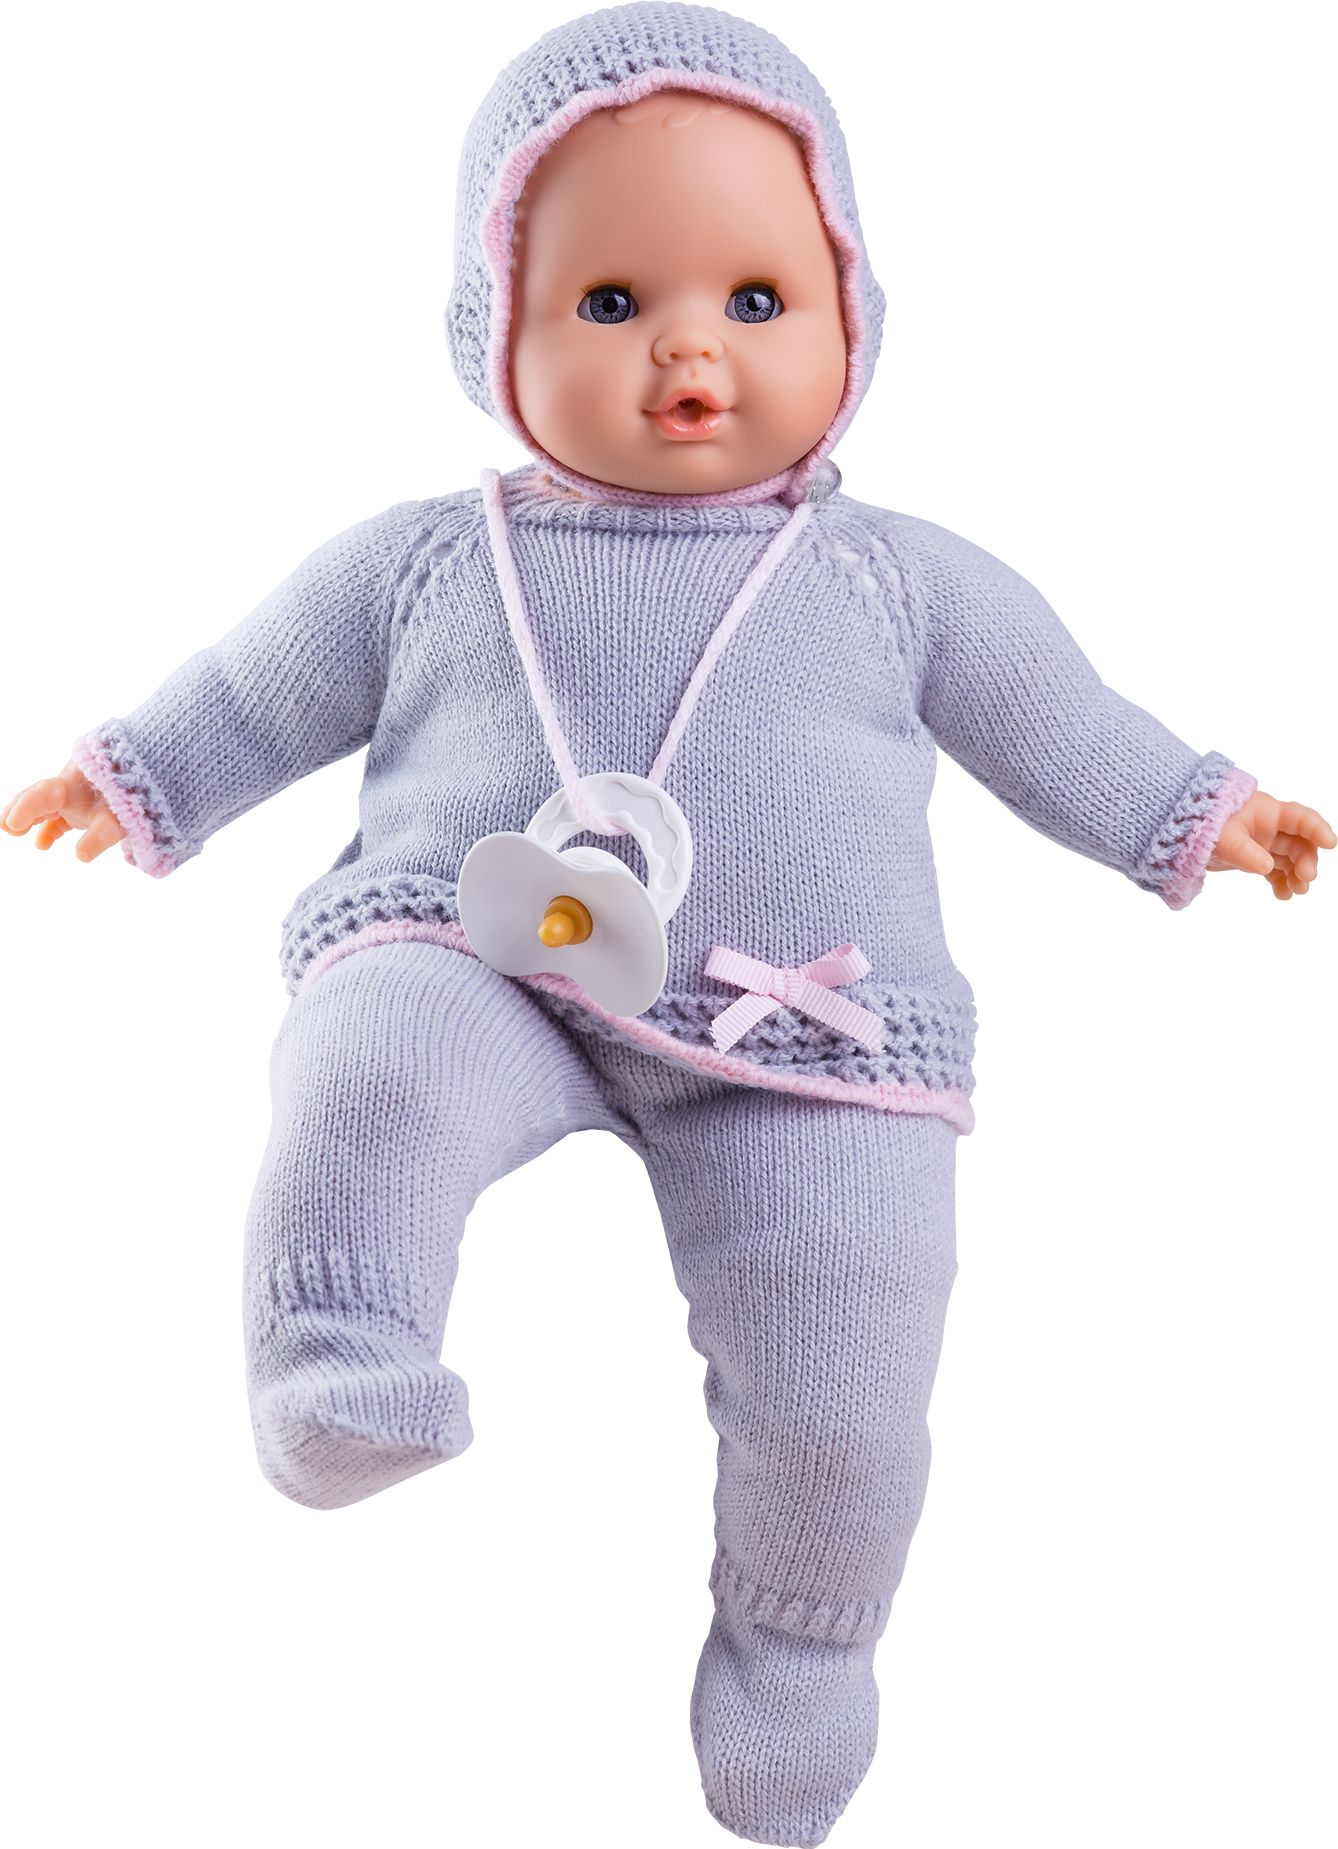 Realistické miminko - holčička Sonia  v pleteném oblečku  od firmy Paola Reina - obrázek 1